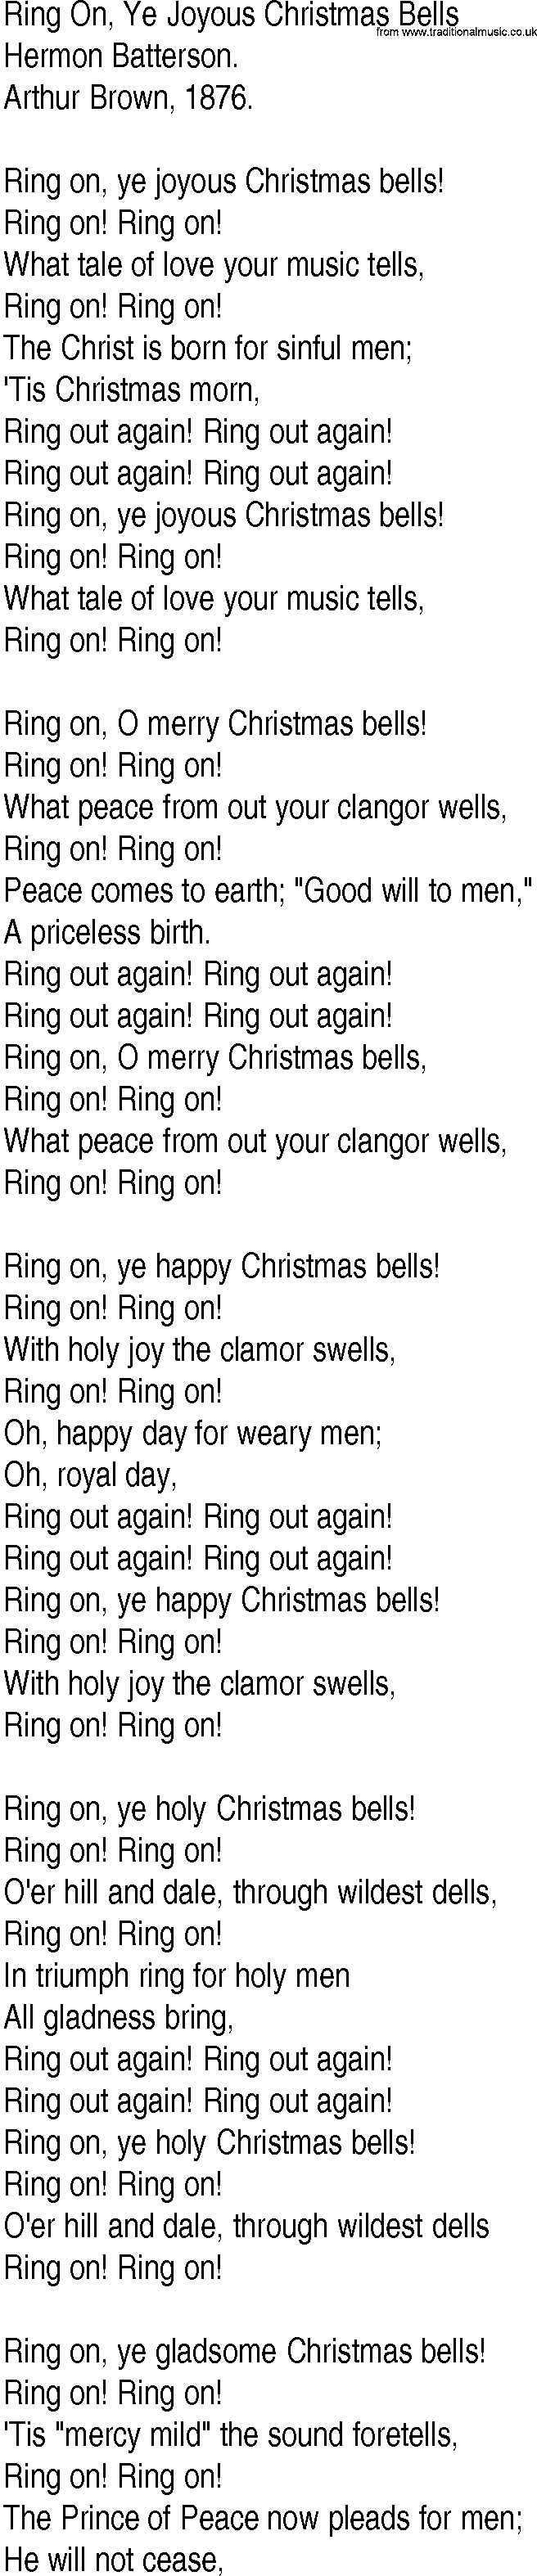 Hymn and Gospel Song: Ring On, Ye Joyous Christmas Bells by Hera�mon Bata�tera�son lyrics